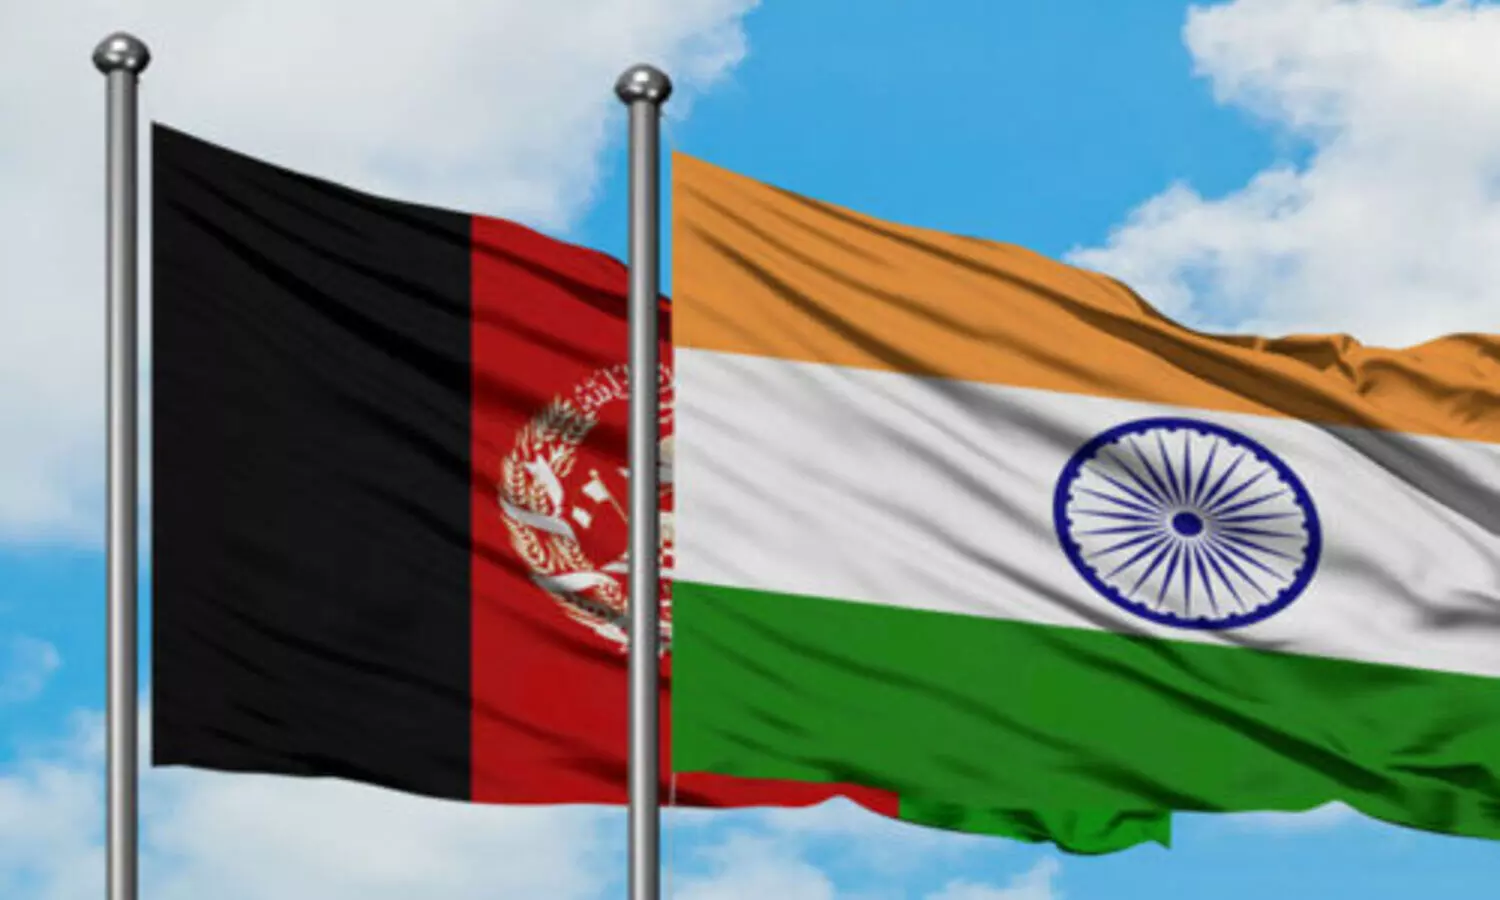 taliban and india flag